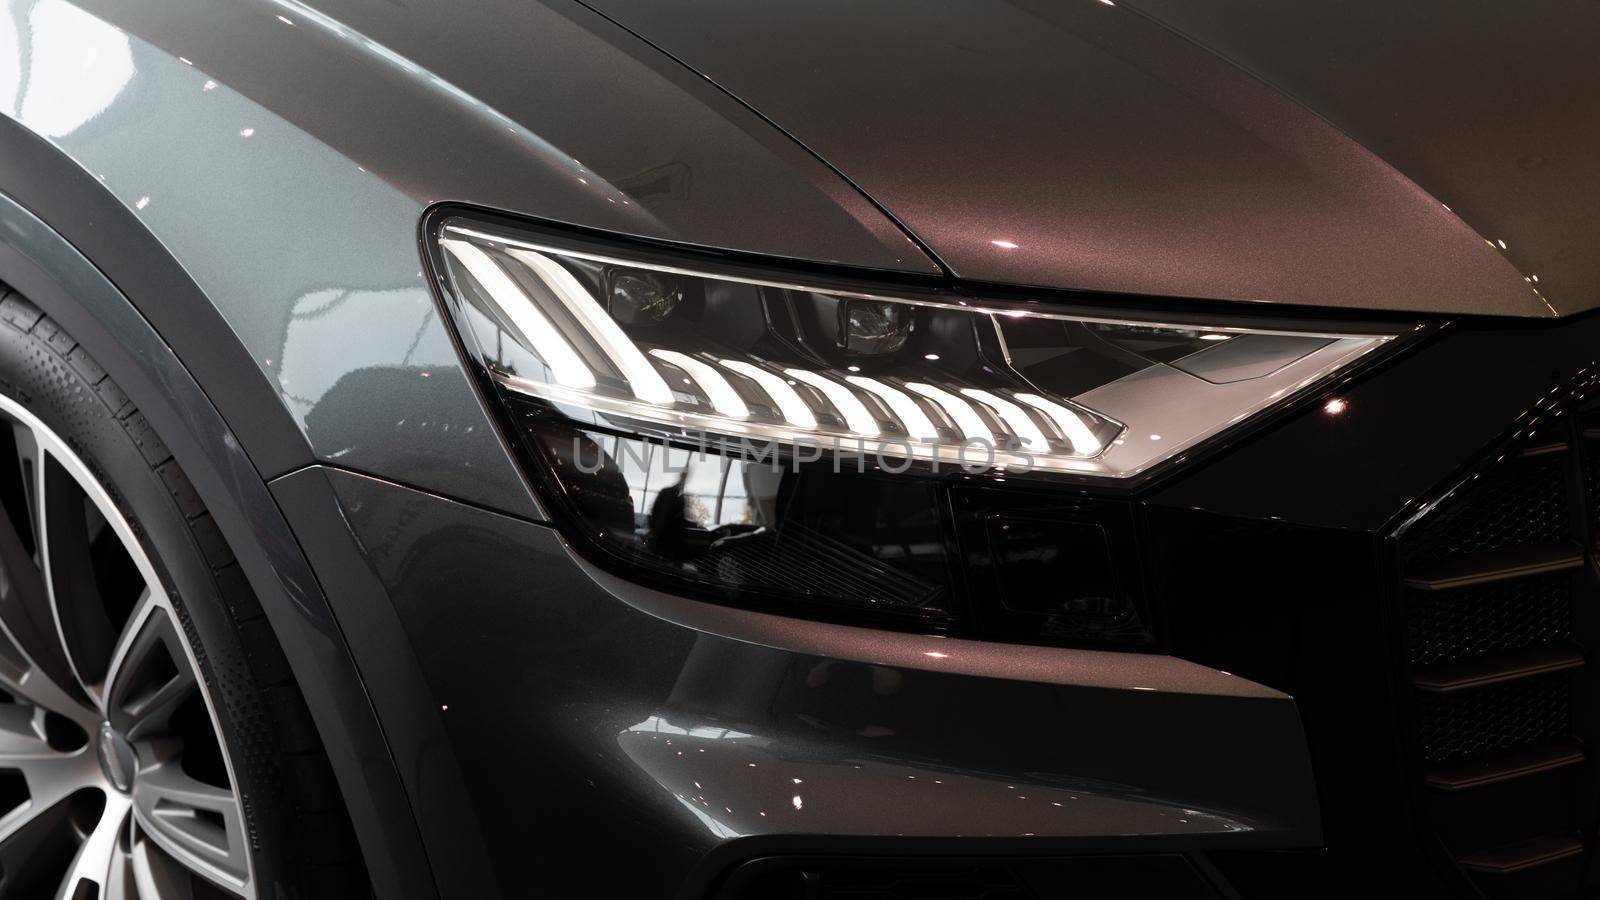 headlight of a gray modern car close-up in a car dealership.